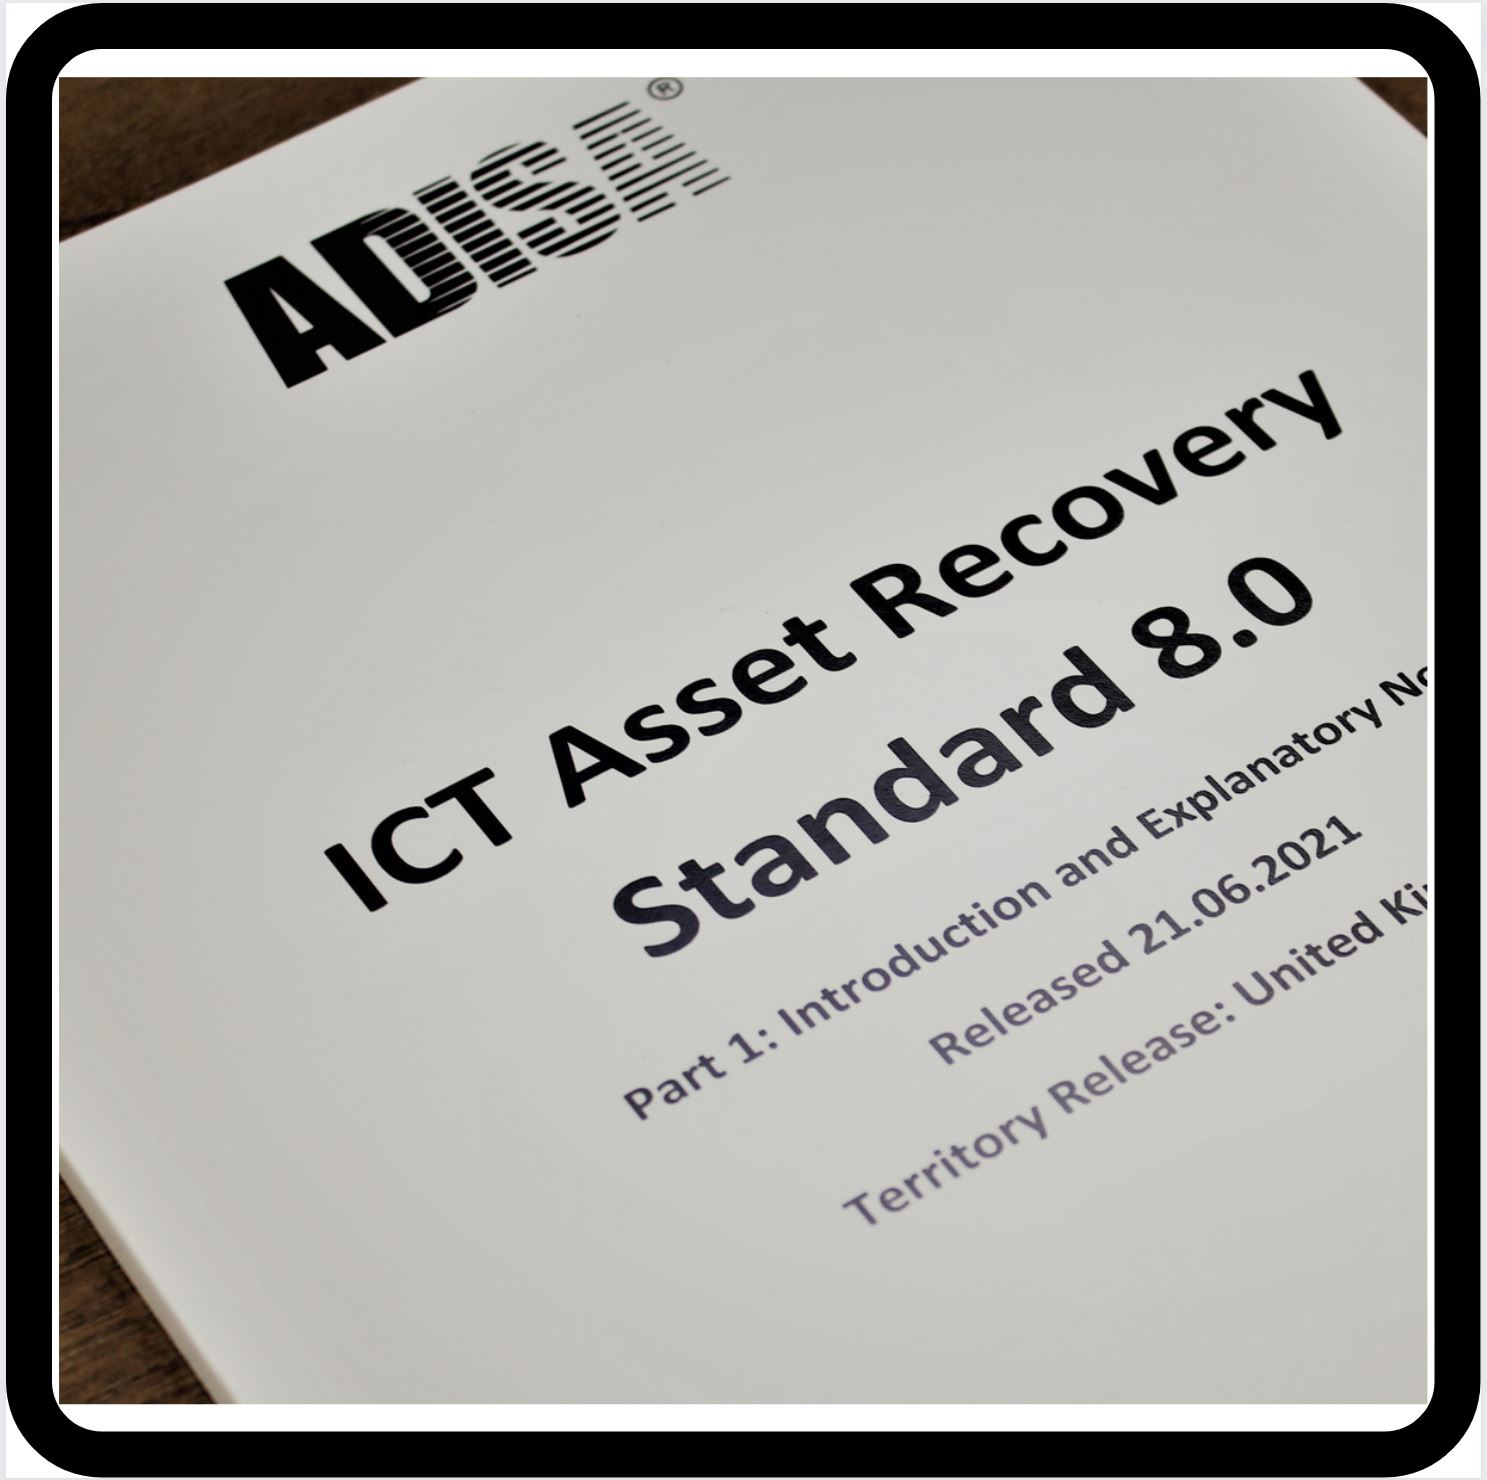 ADISA ICT Asset Recovery Standard 8.0 – Part 1.